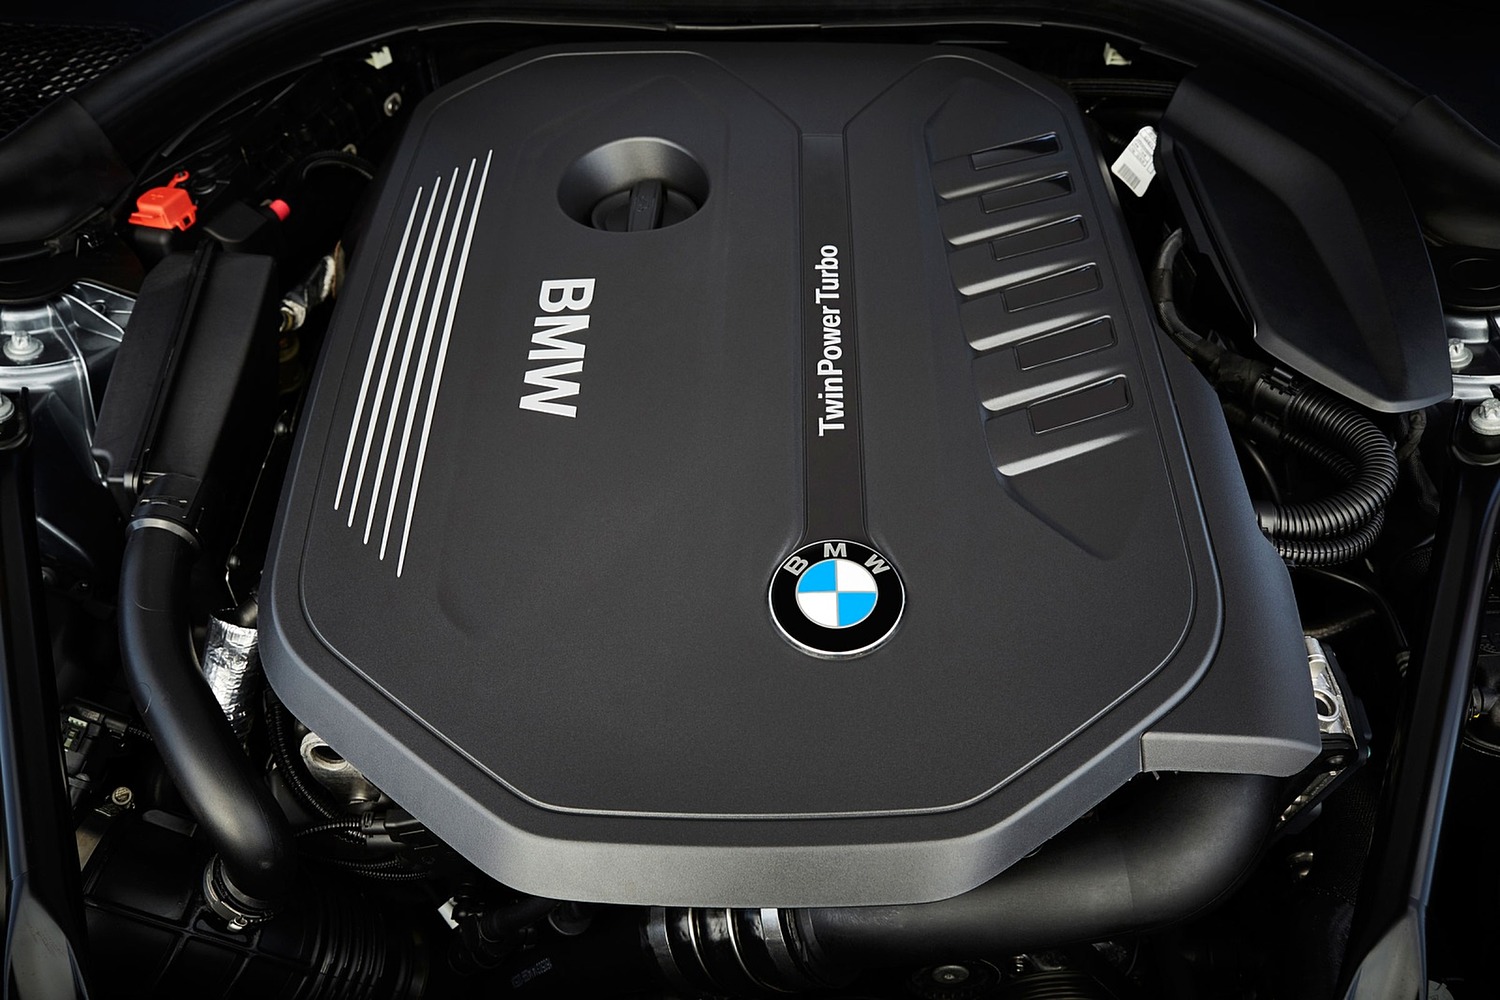 BMW 5 Series 540i Sedan 3.0L V6 Turbo Engine (2017 model year shown)